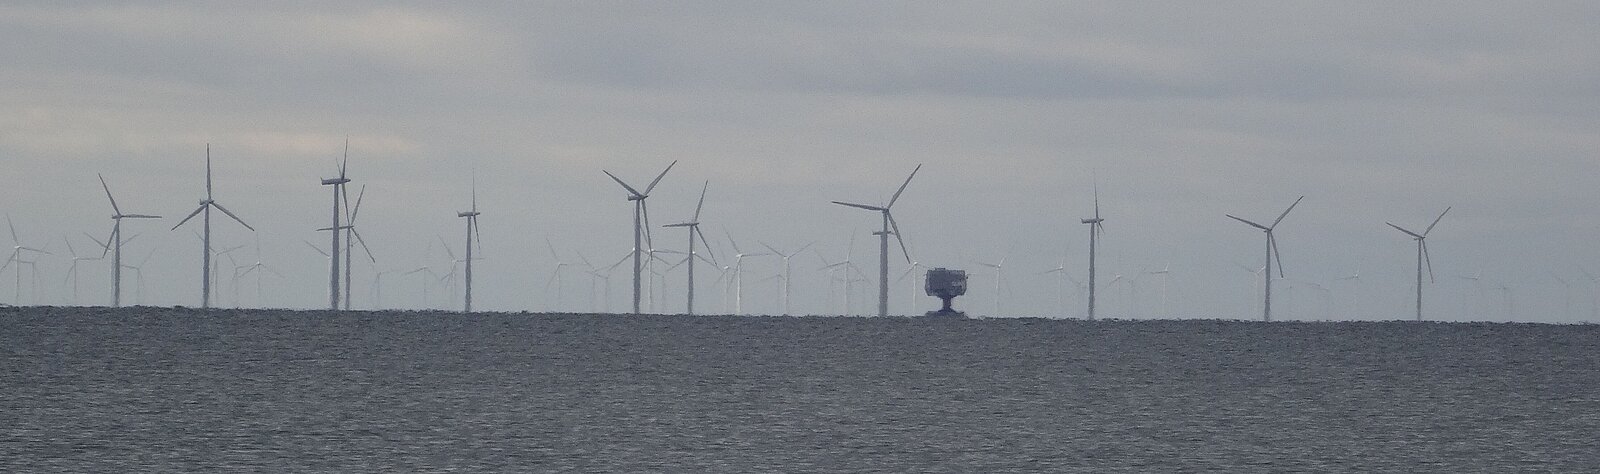 Offshore windpark